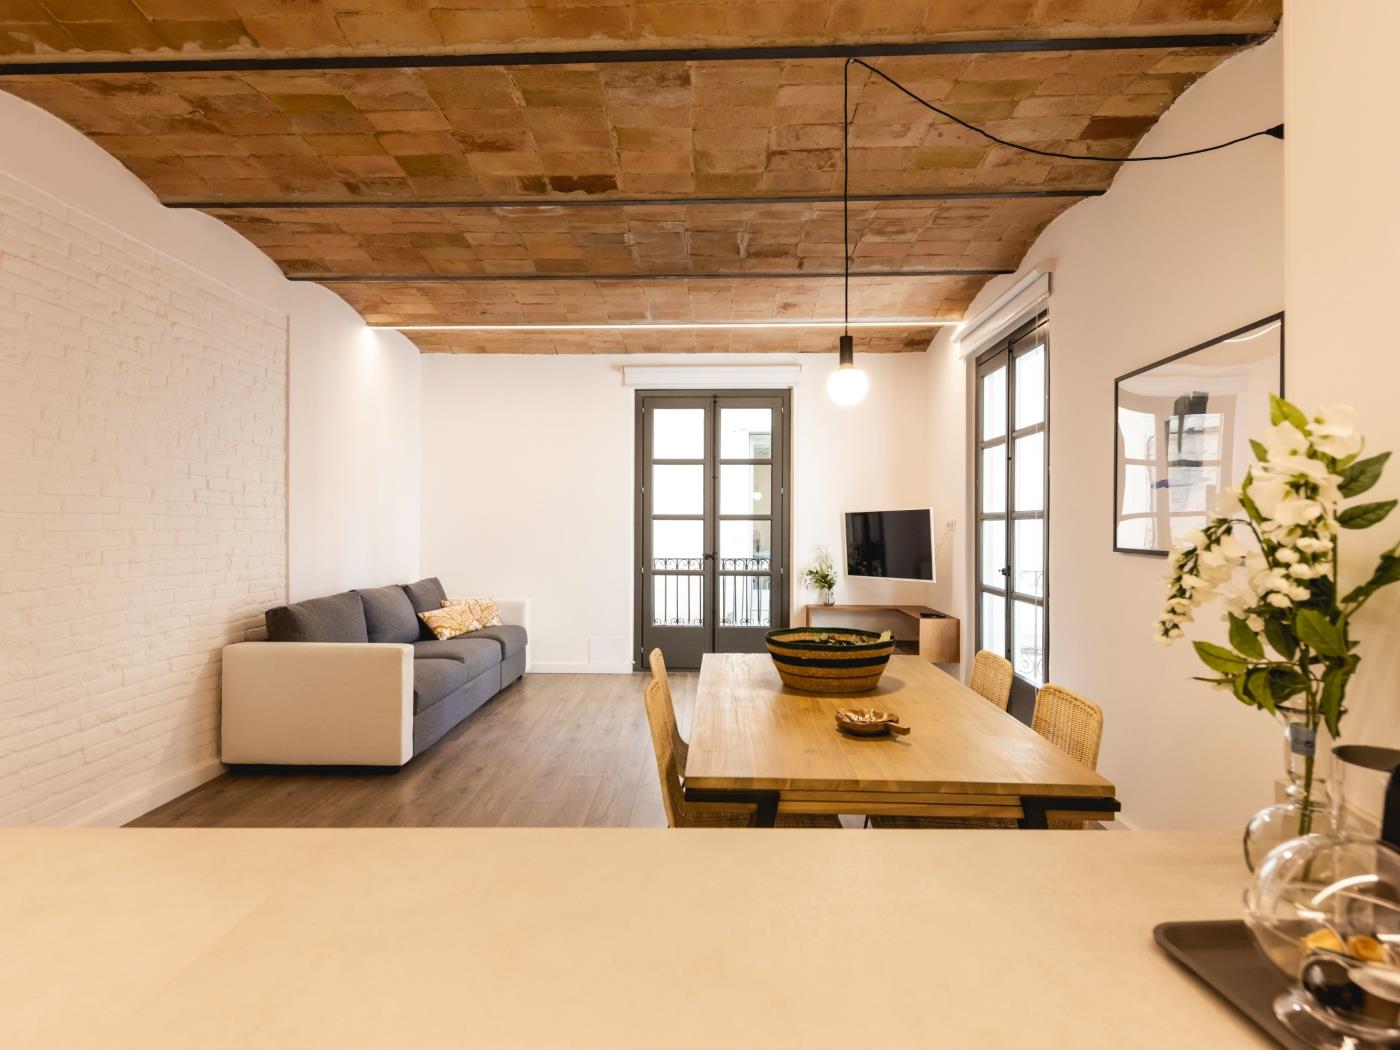 Bravissimo Entresol B, holiday apartment in Girona in Girona